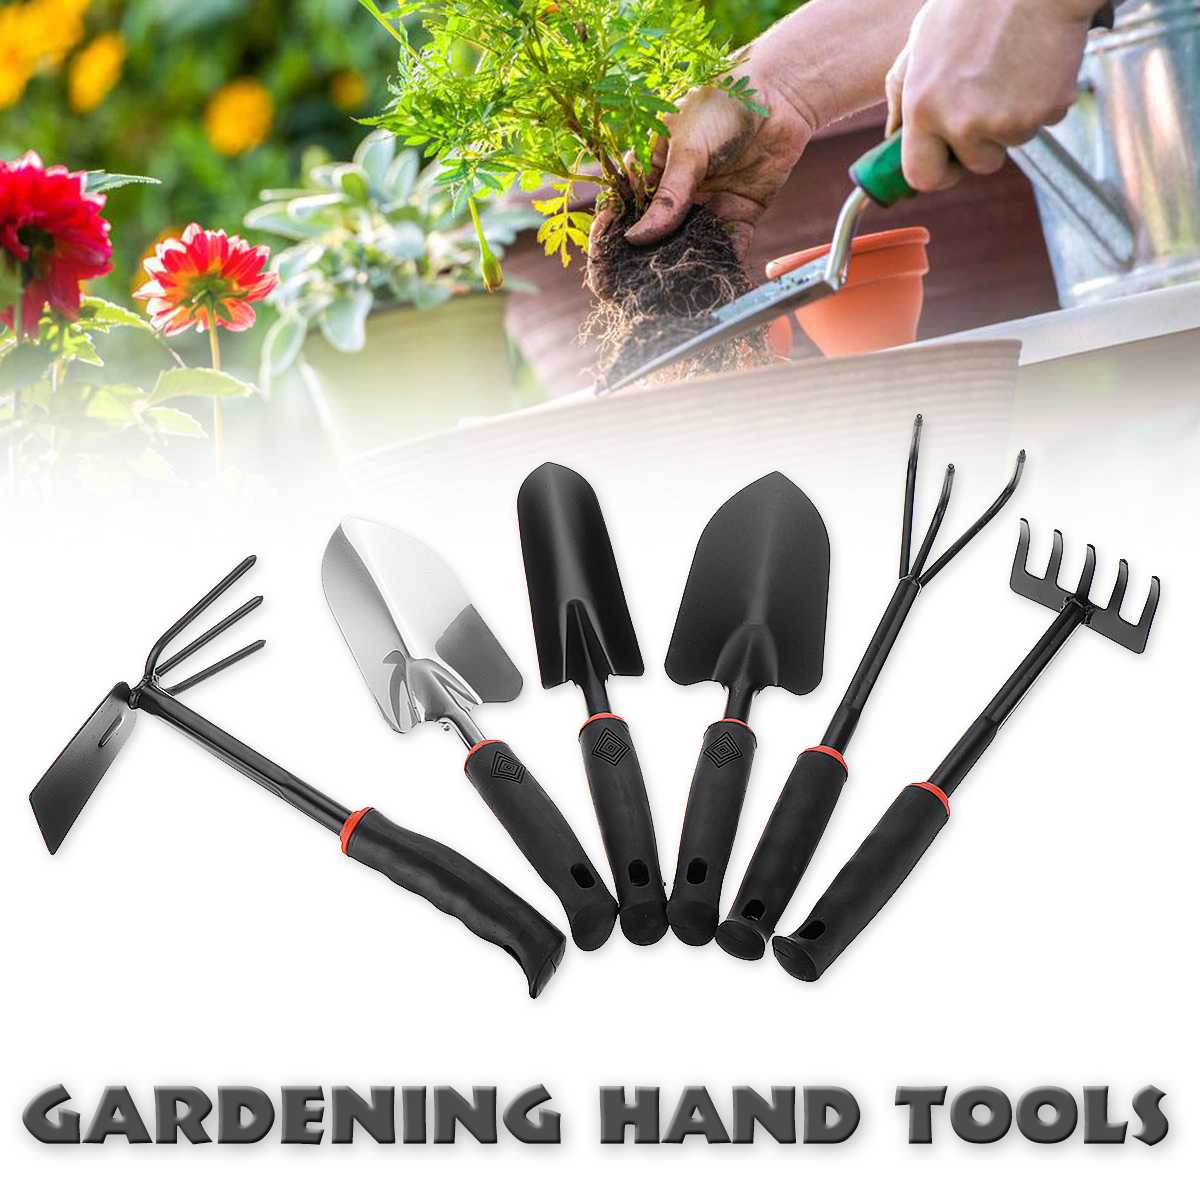 Useful gardening tools - 51 - Smart and Cool Stuff